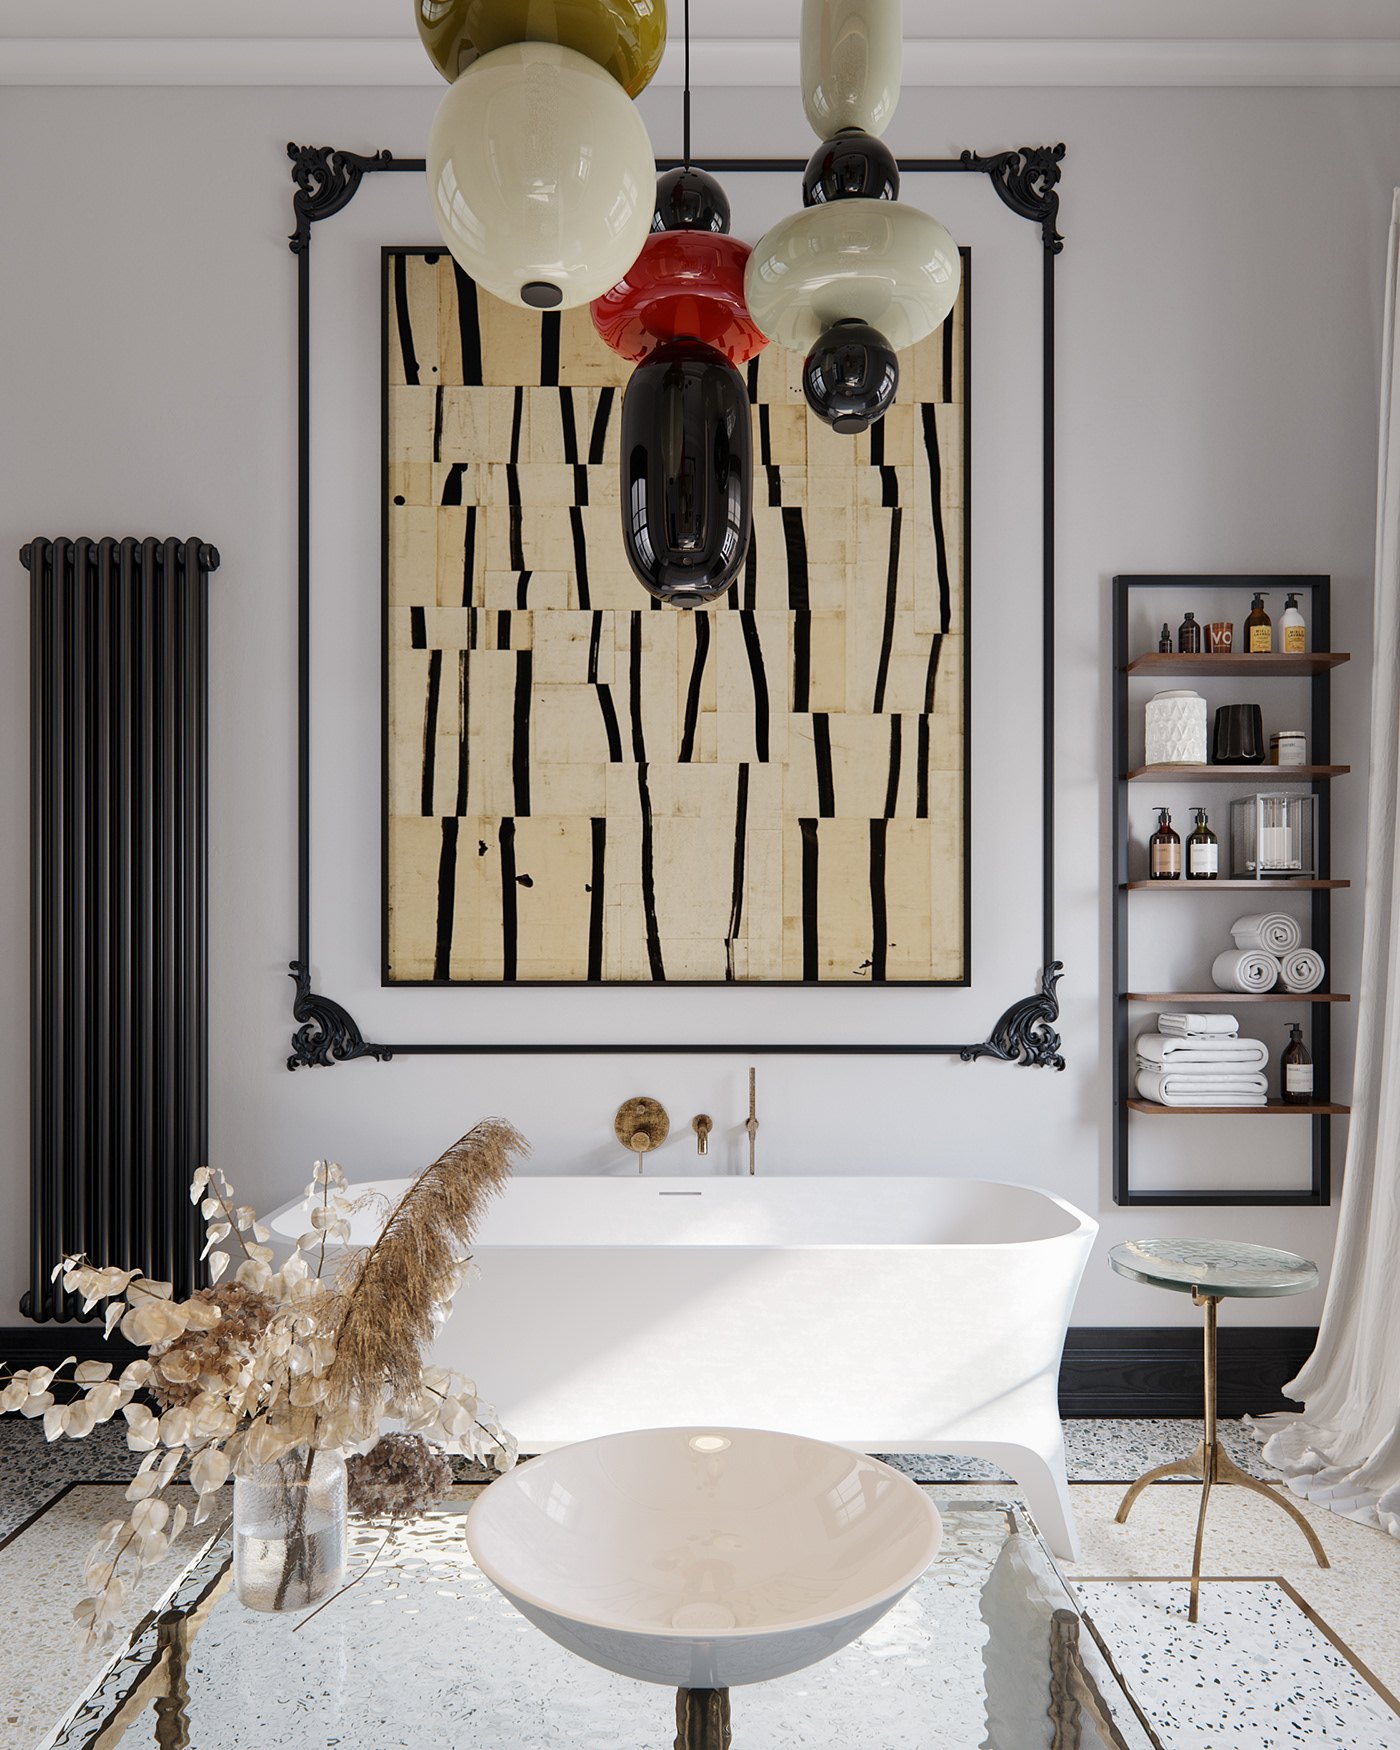 3D architecture bathroom bedroom corona render  interior design  Render visualization